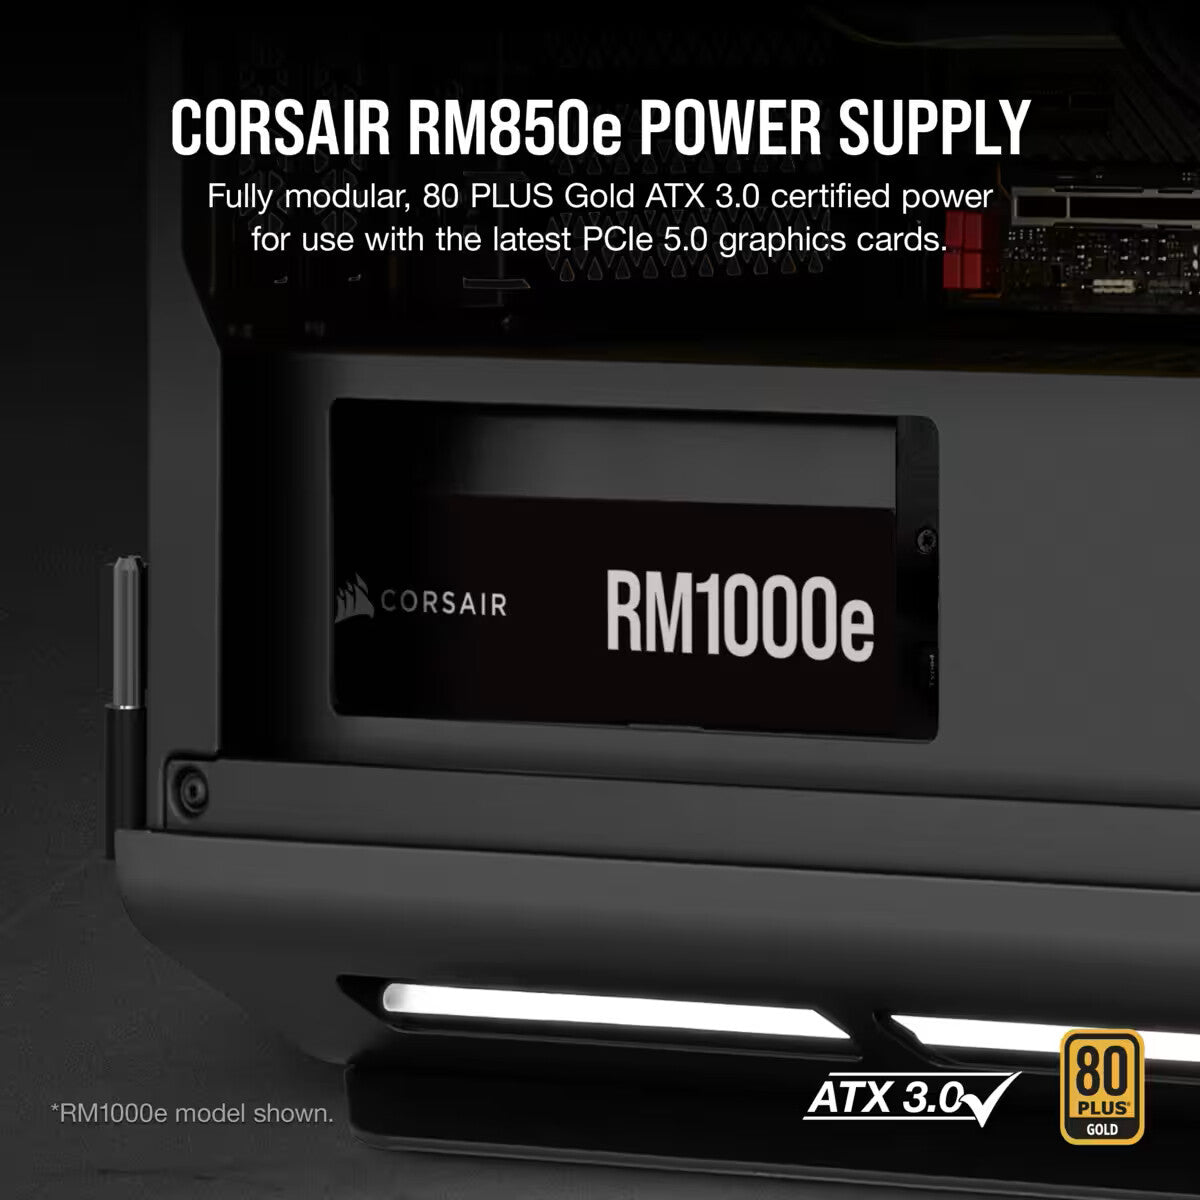 Corsair RM850e - 850W 80+ Gold Fully Modular Power Supply Unit